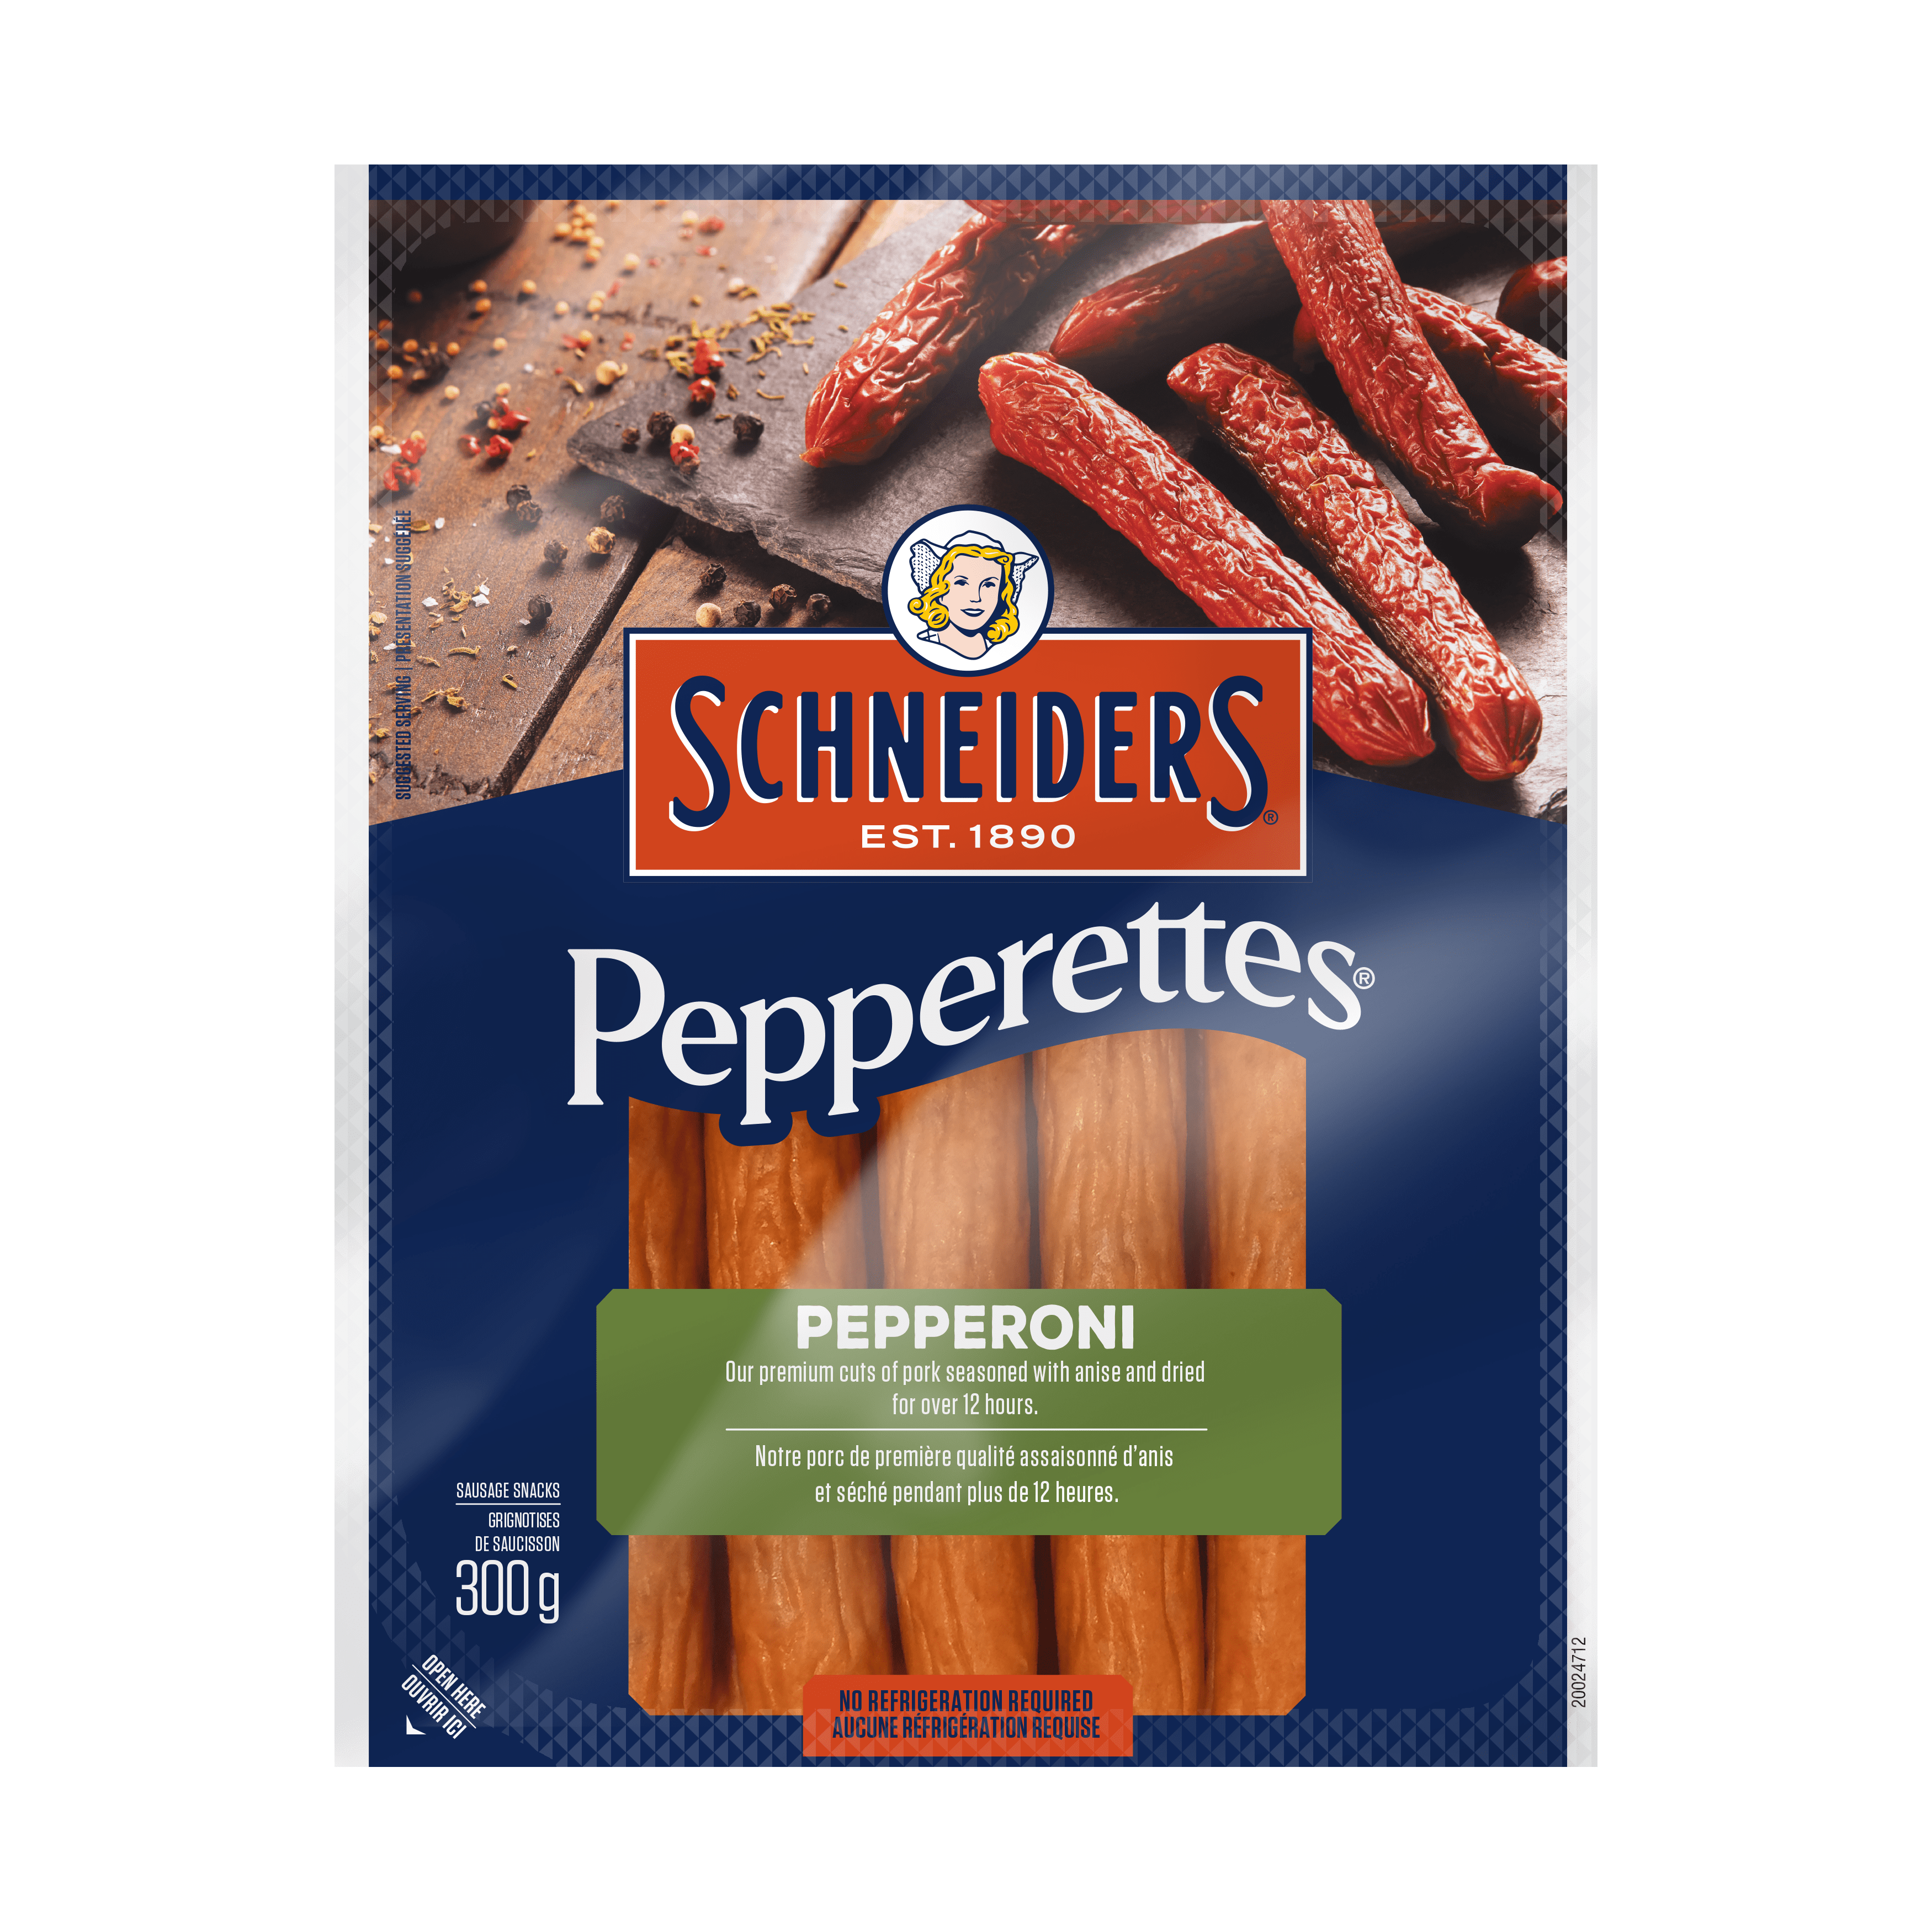 Pepperoni Pepperettes